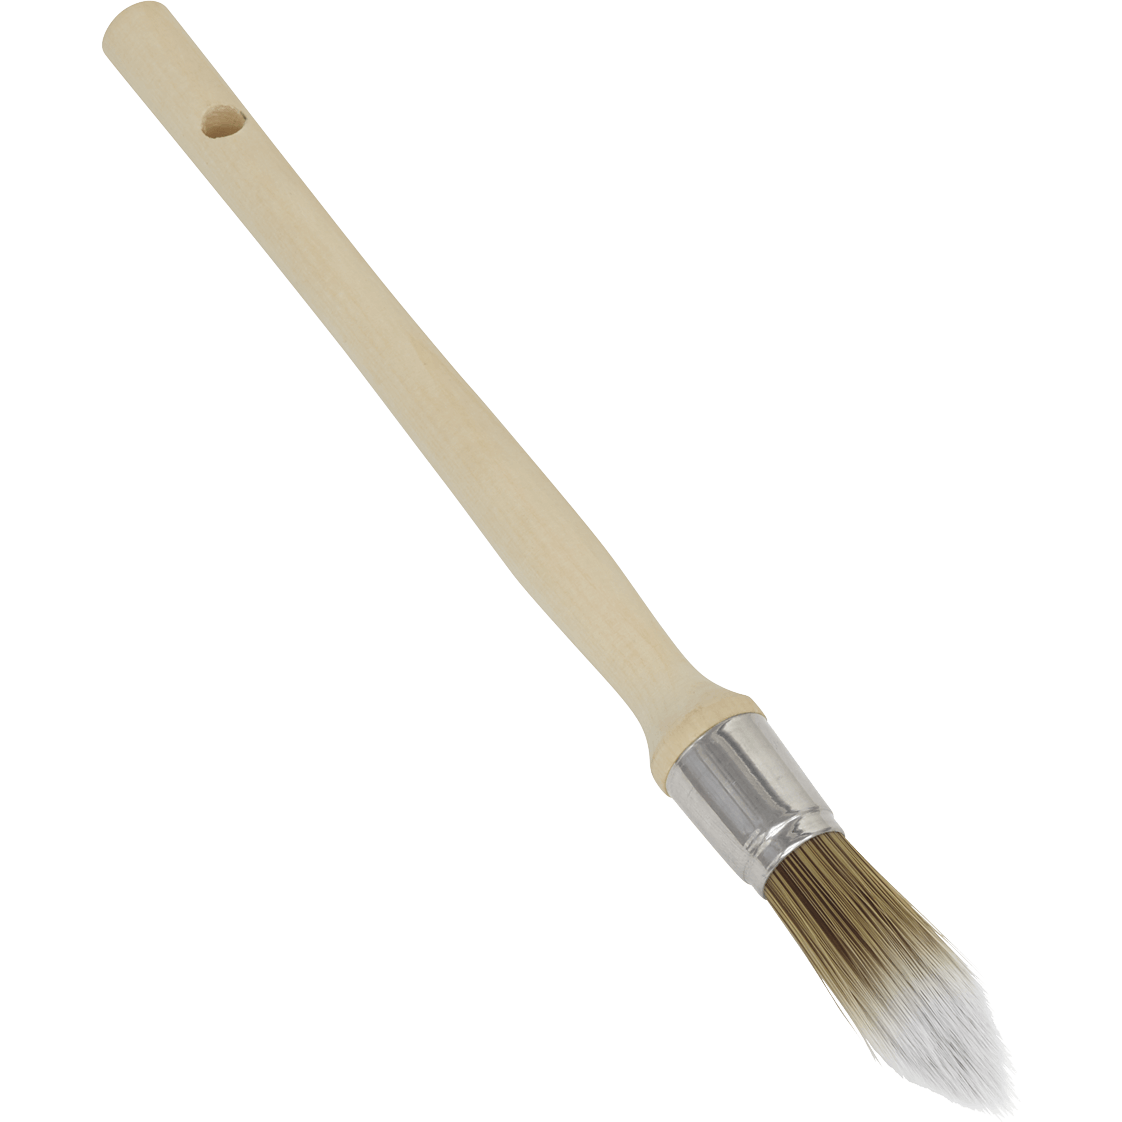 Sealey Wooden Handle Round Sash Paint Brush 15mm